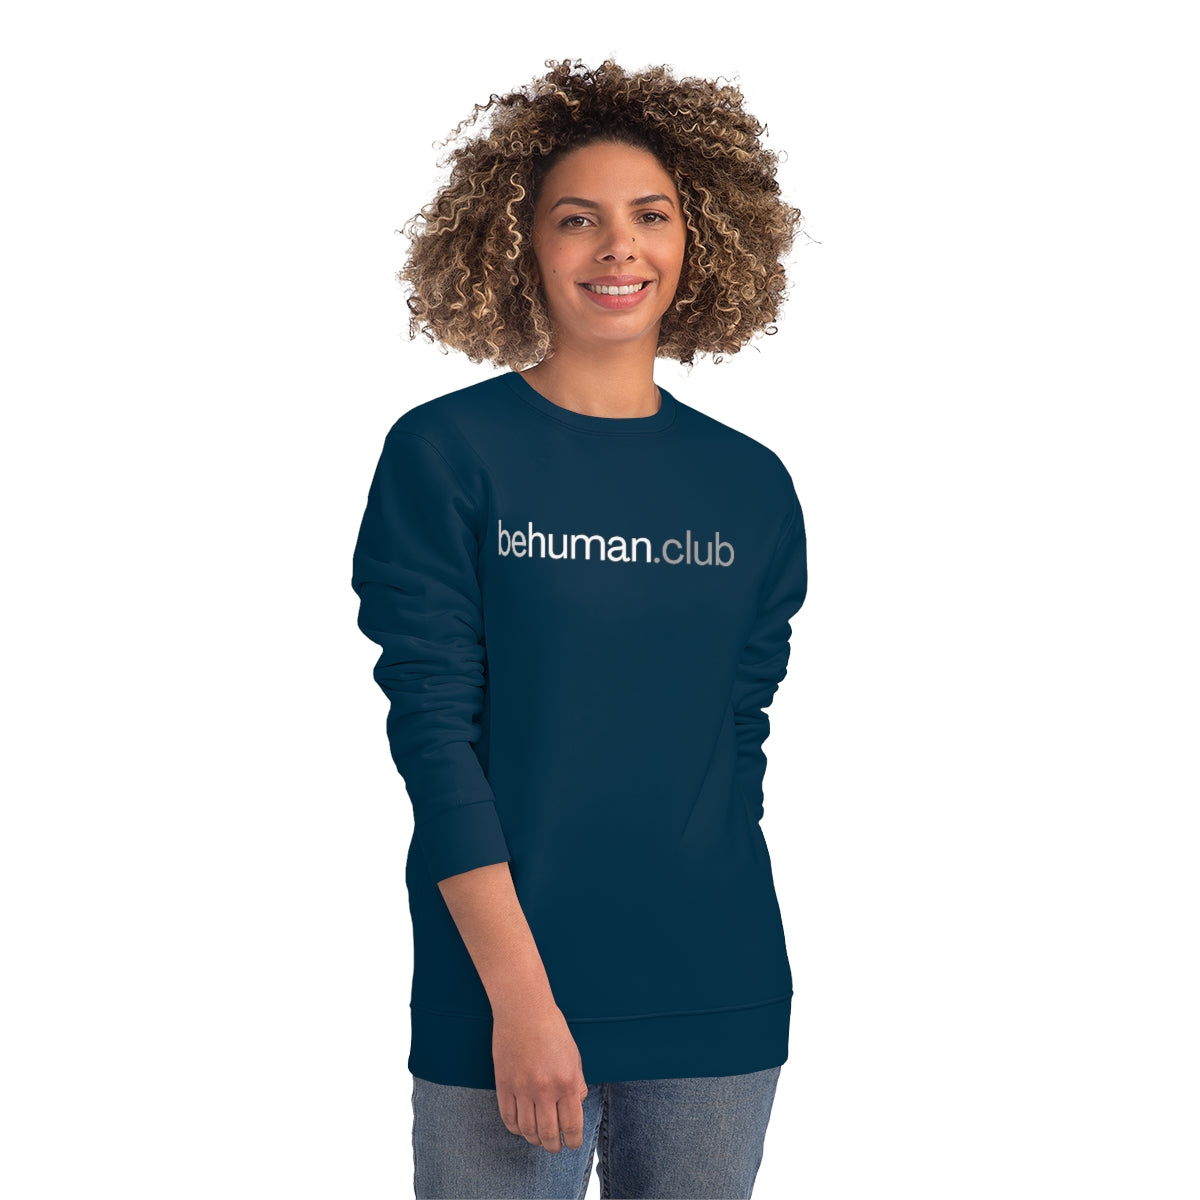 behuman.club - Unisex Changer Sweatshirt